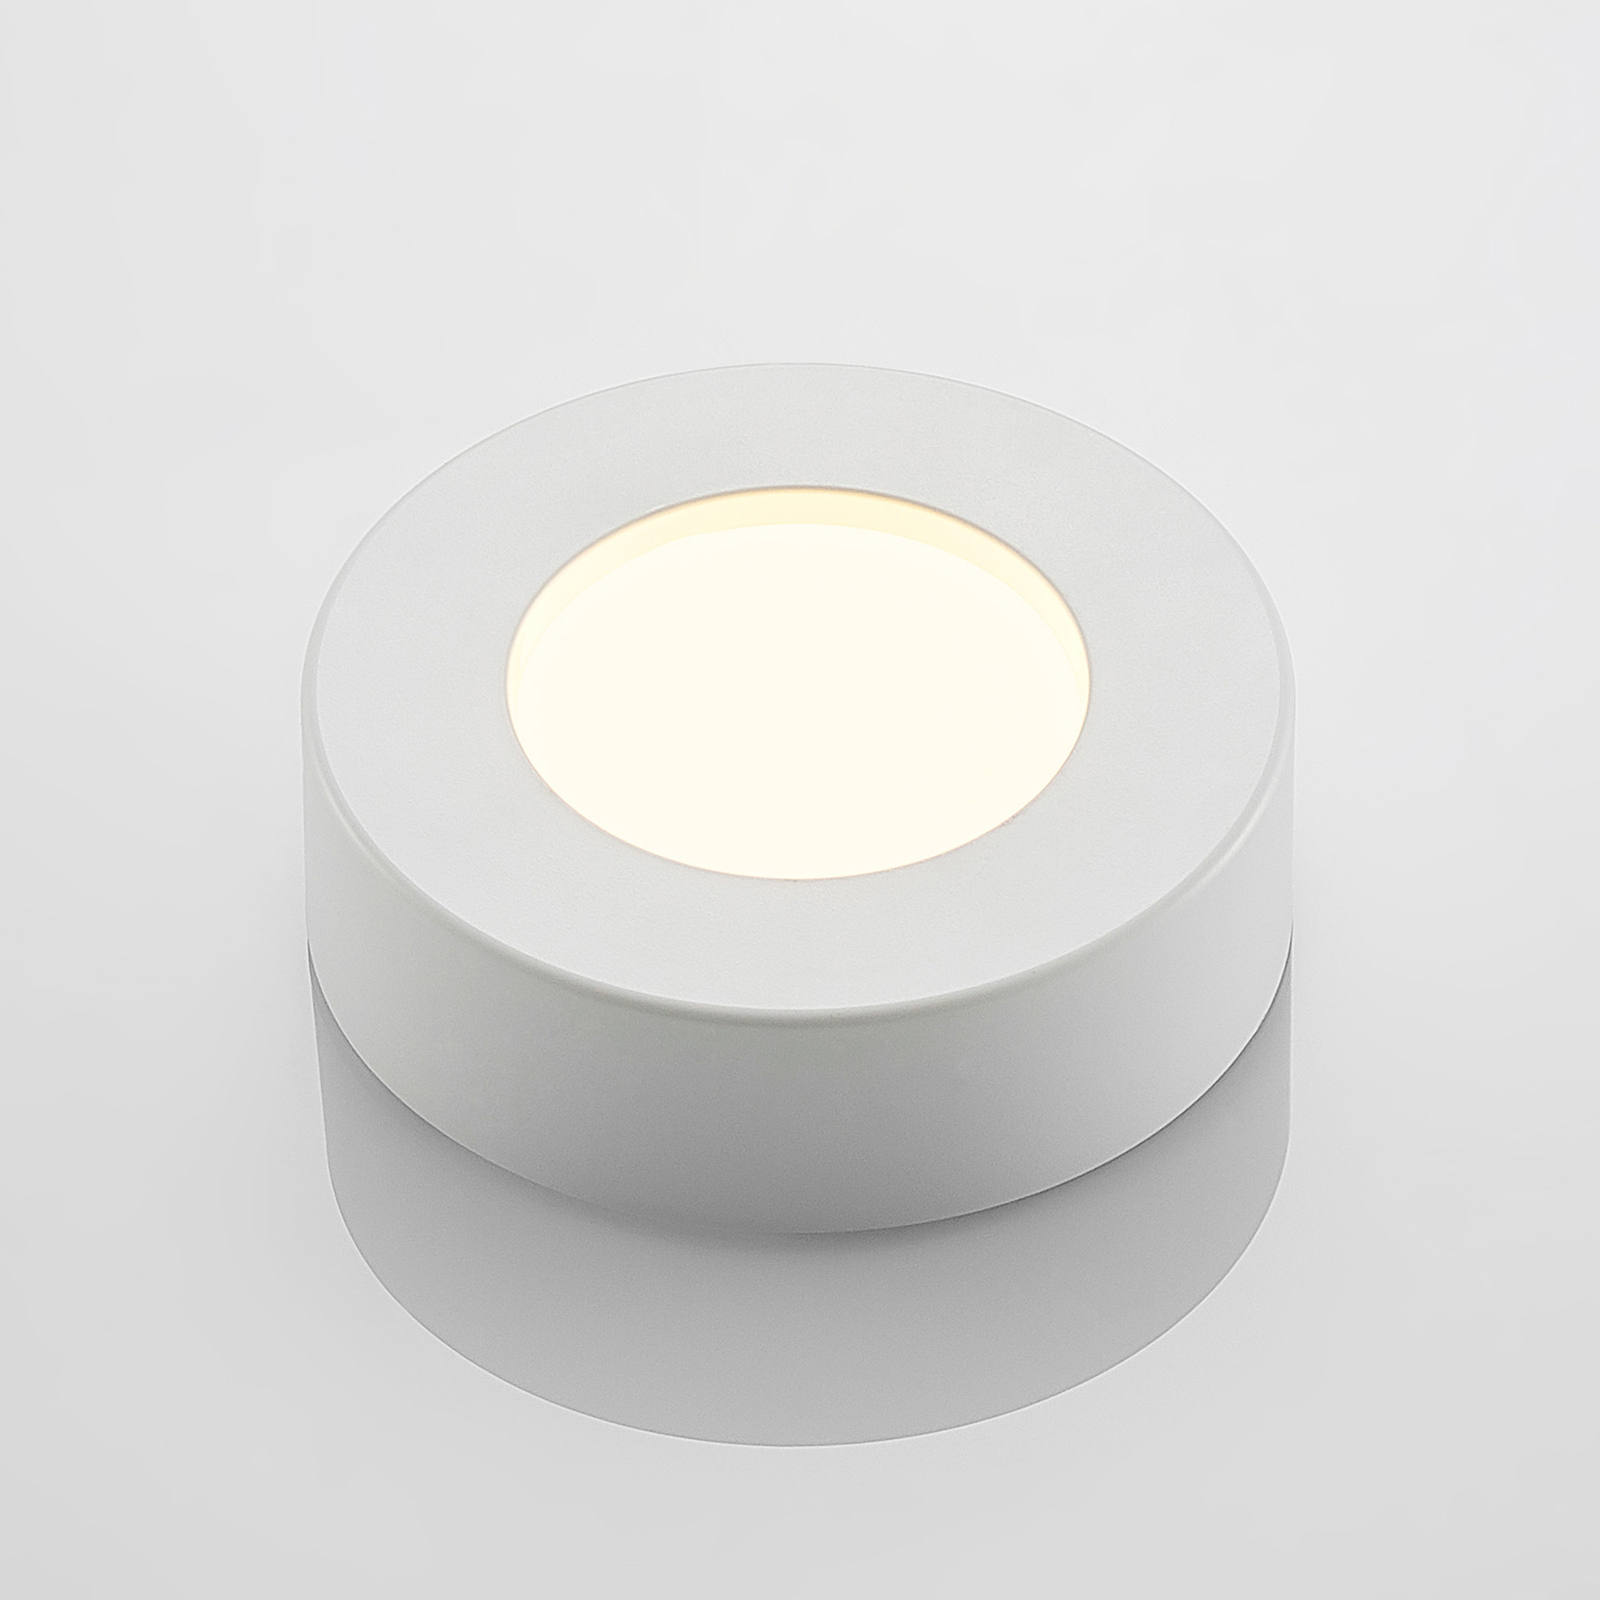 Prios Edwina LED plafondlamp, wit, 12,2 cm